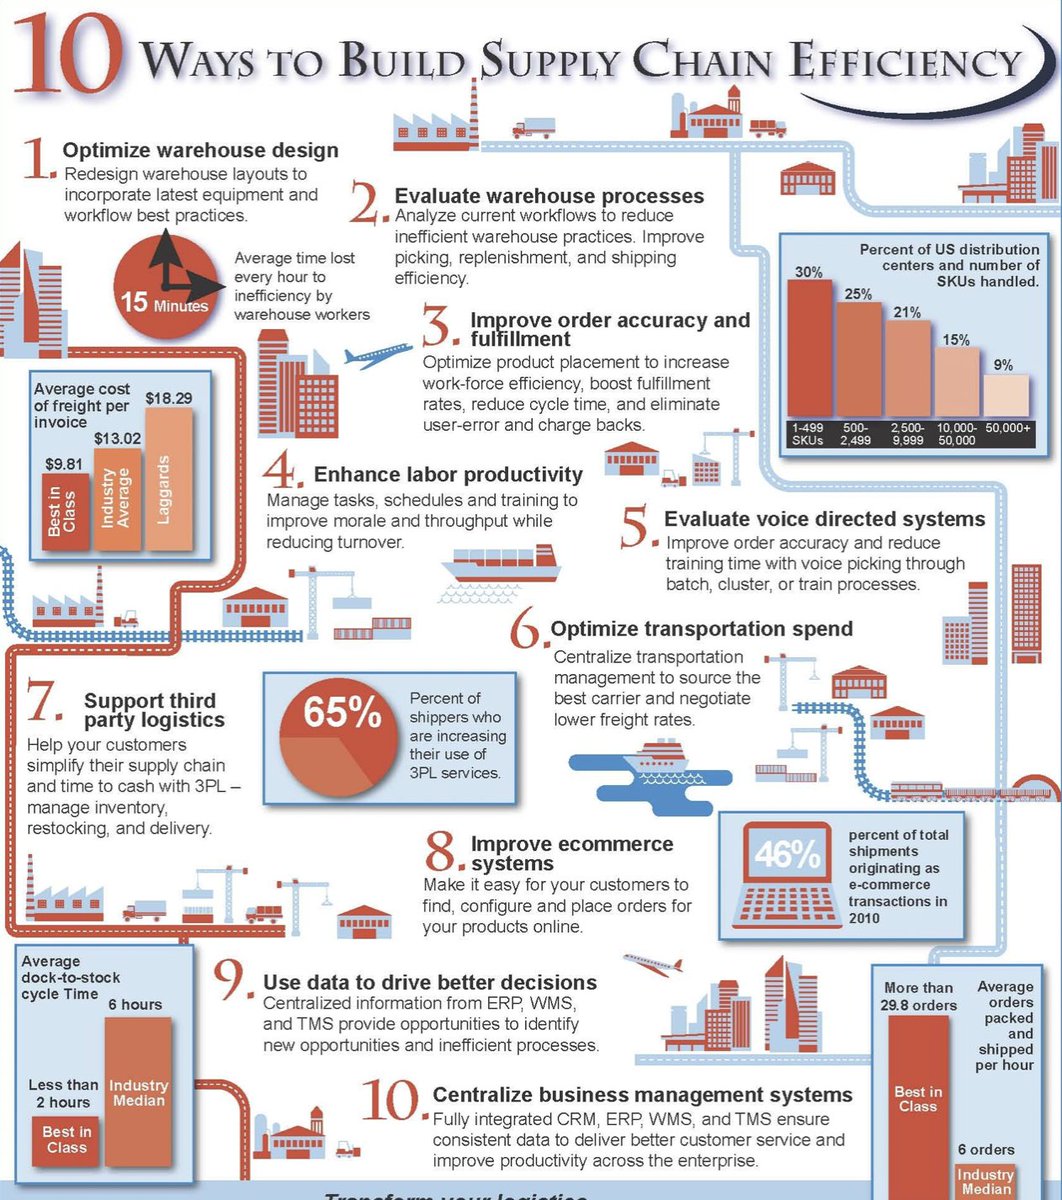 #Infographic: 10 Ways to build supply chain efficiency! cc: @LogisticsMatter @antgrasso @Nicochan33 @ipfconline1 @KirkDBorne #Industry40 #DigitalTransformation #Industry #Technology #Innovation #Automation #SmartFactory #Warehouse #AI #BigData #SupplyChain